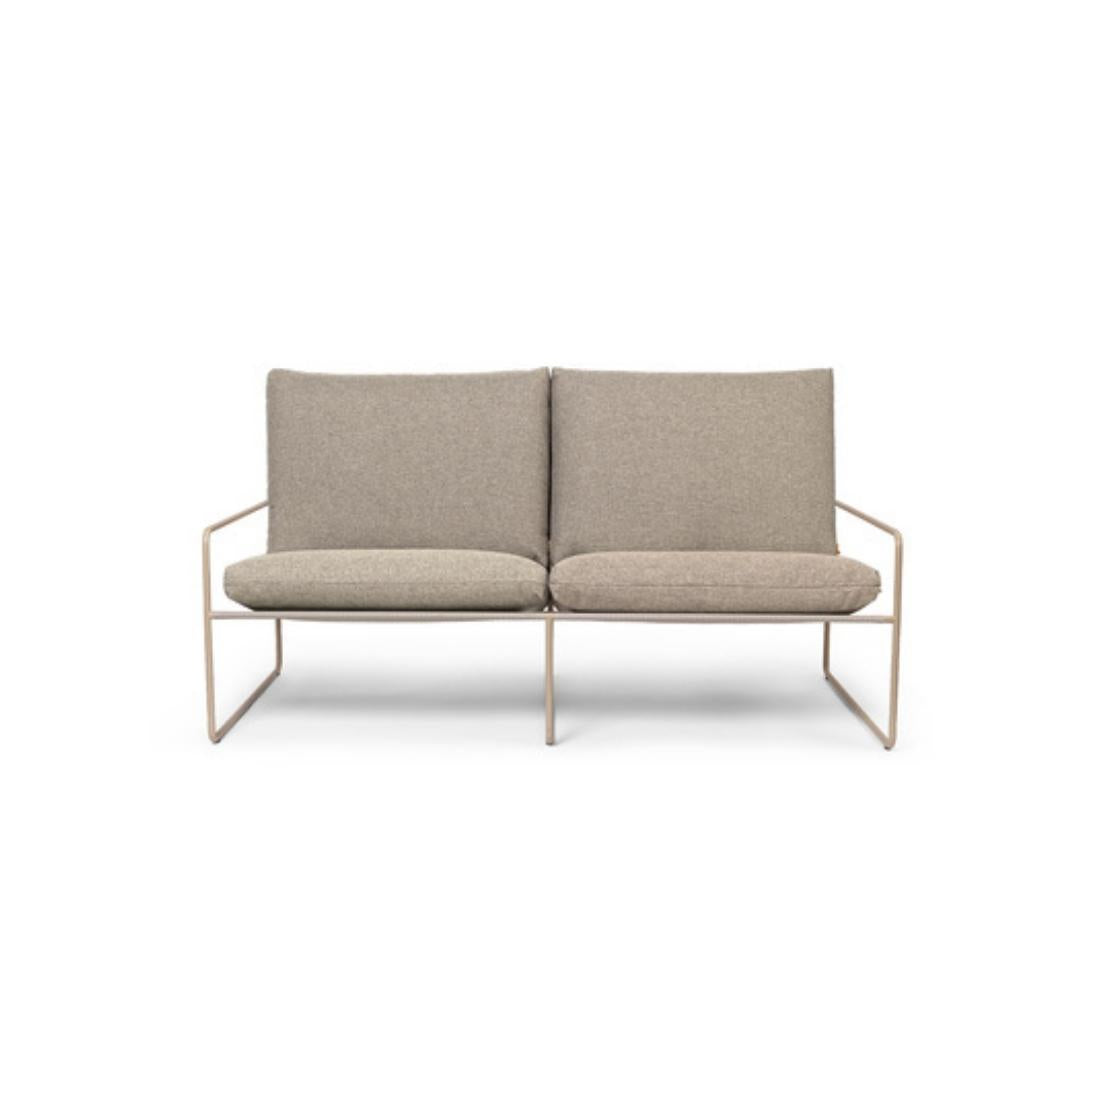 Ferm Living Desert 2 Seater outdoor sofa. Shop online at someday designs #colour_dolce-dark-sand